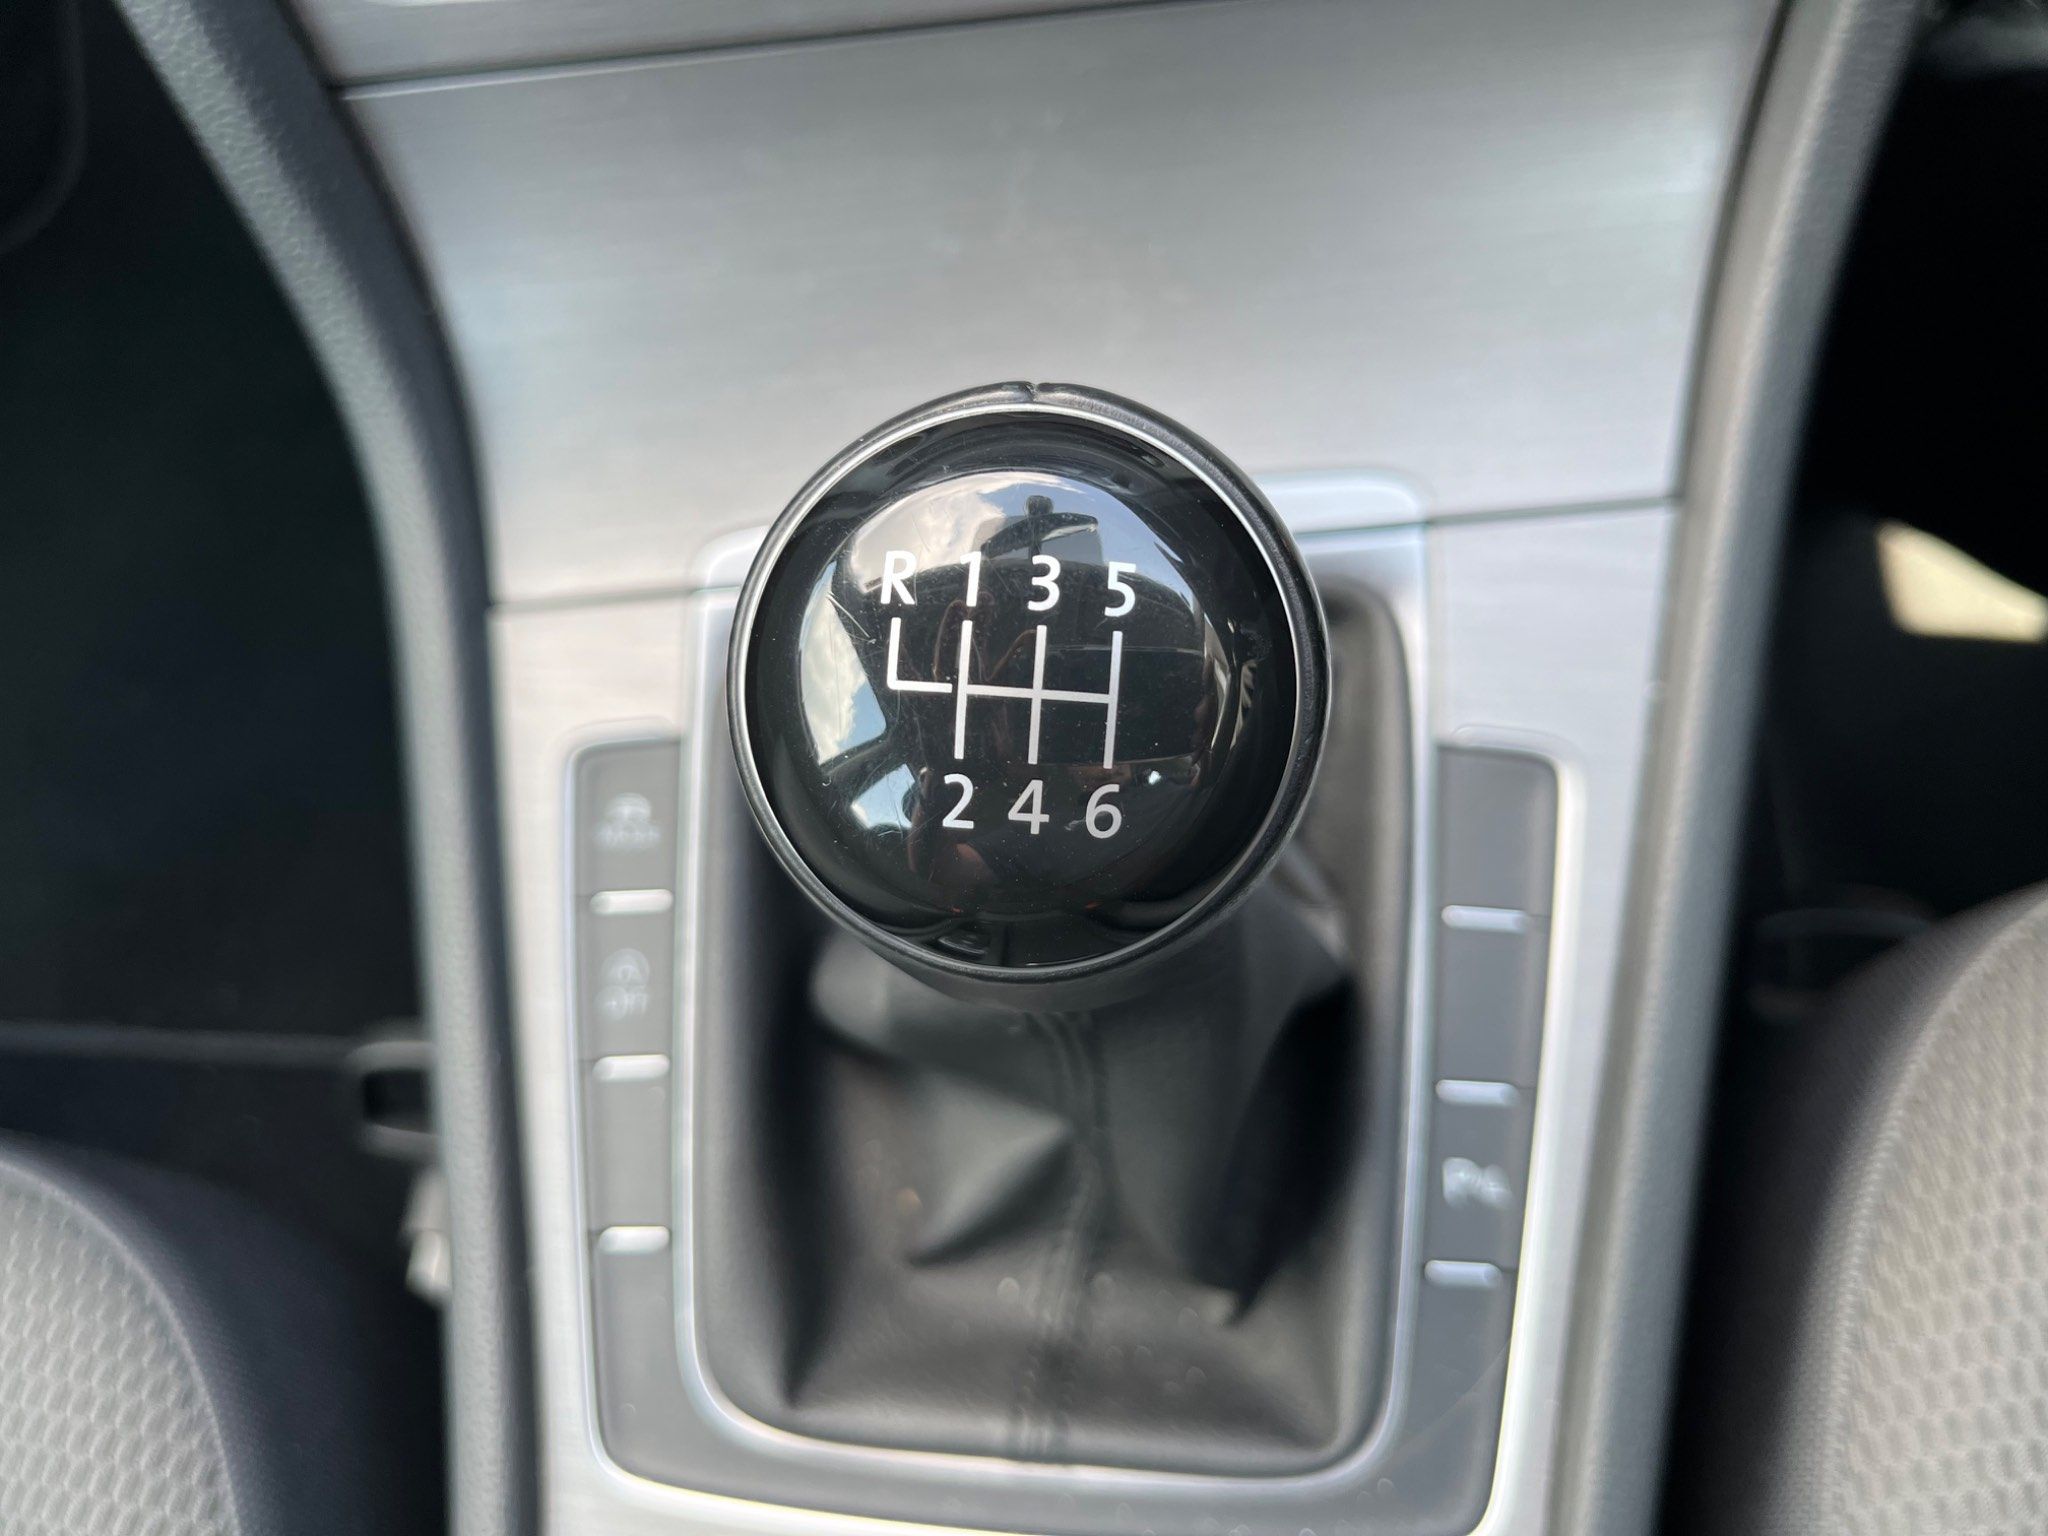 2016 Volkswagen Golf SI BlueMotion Tech Match Edition full